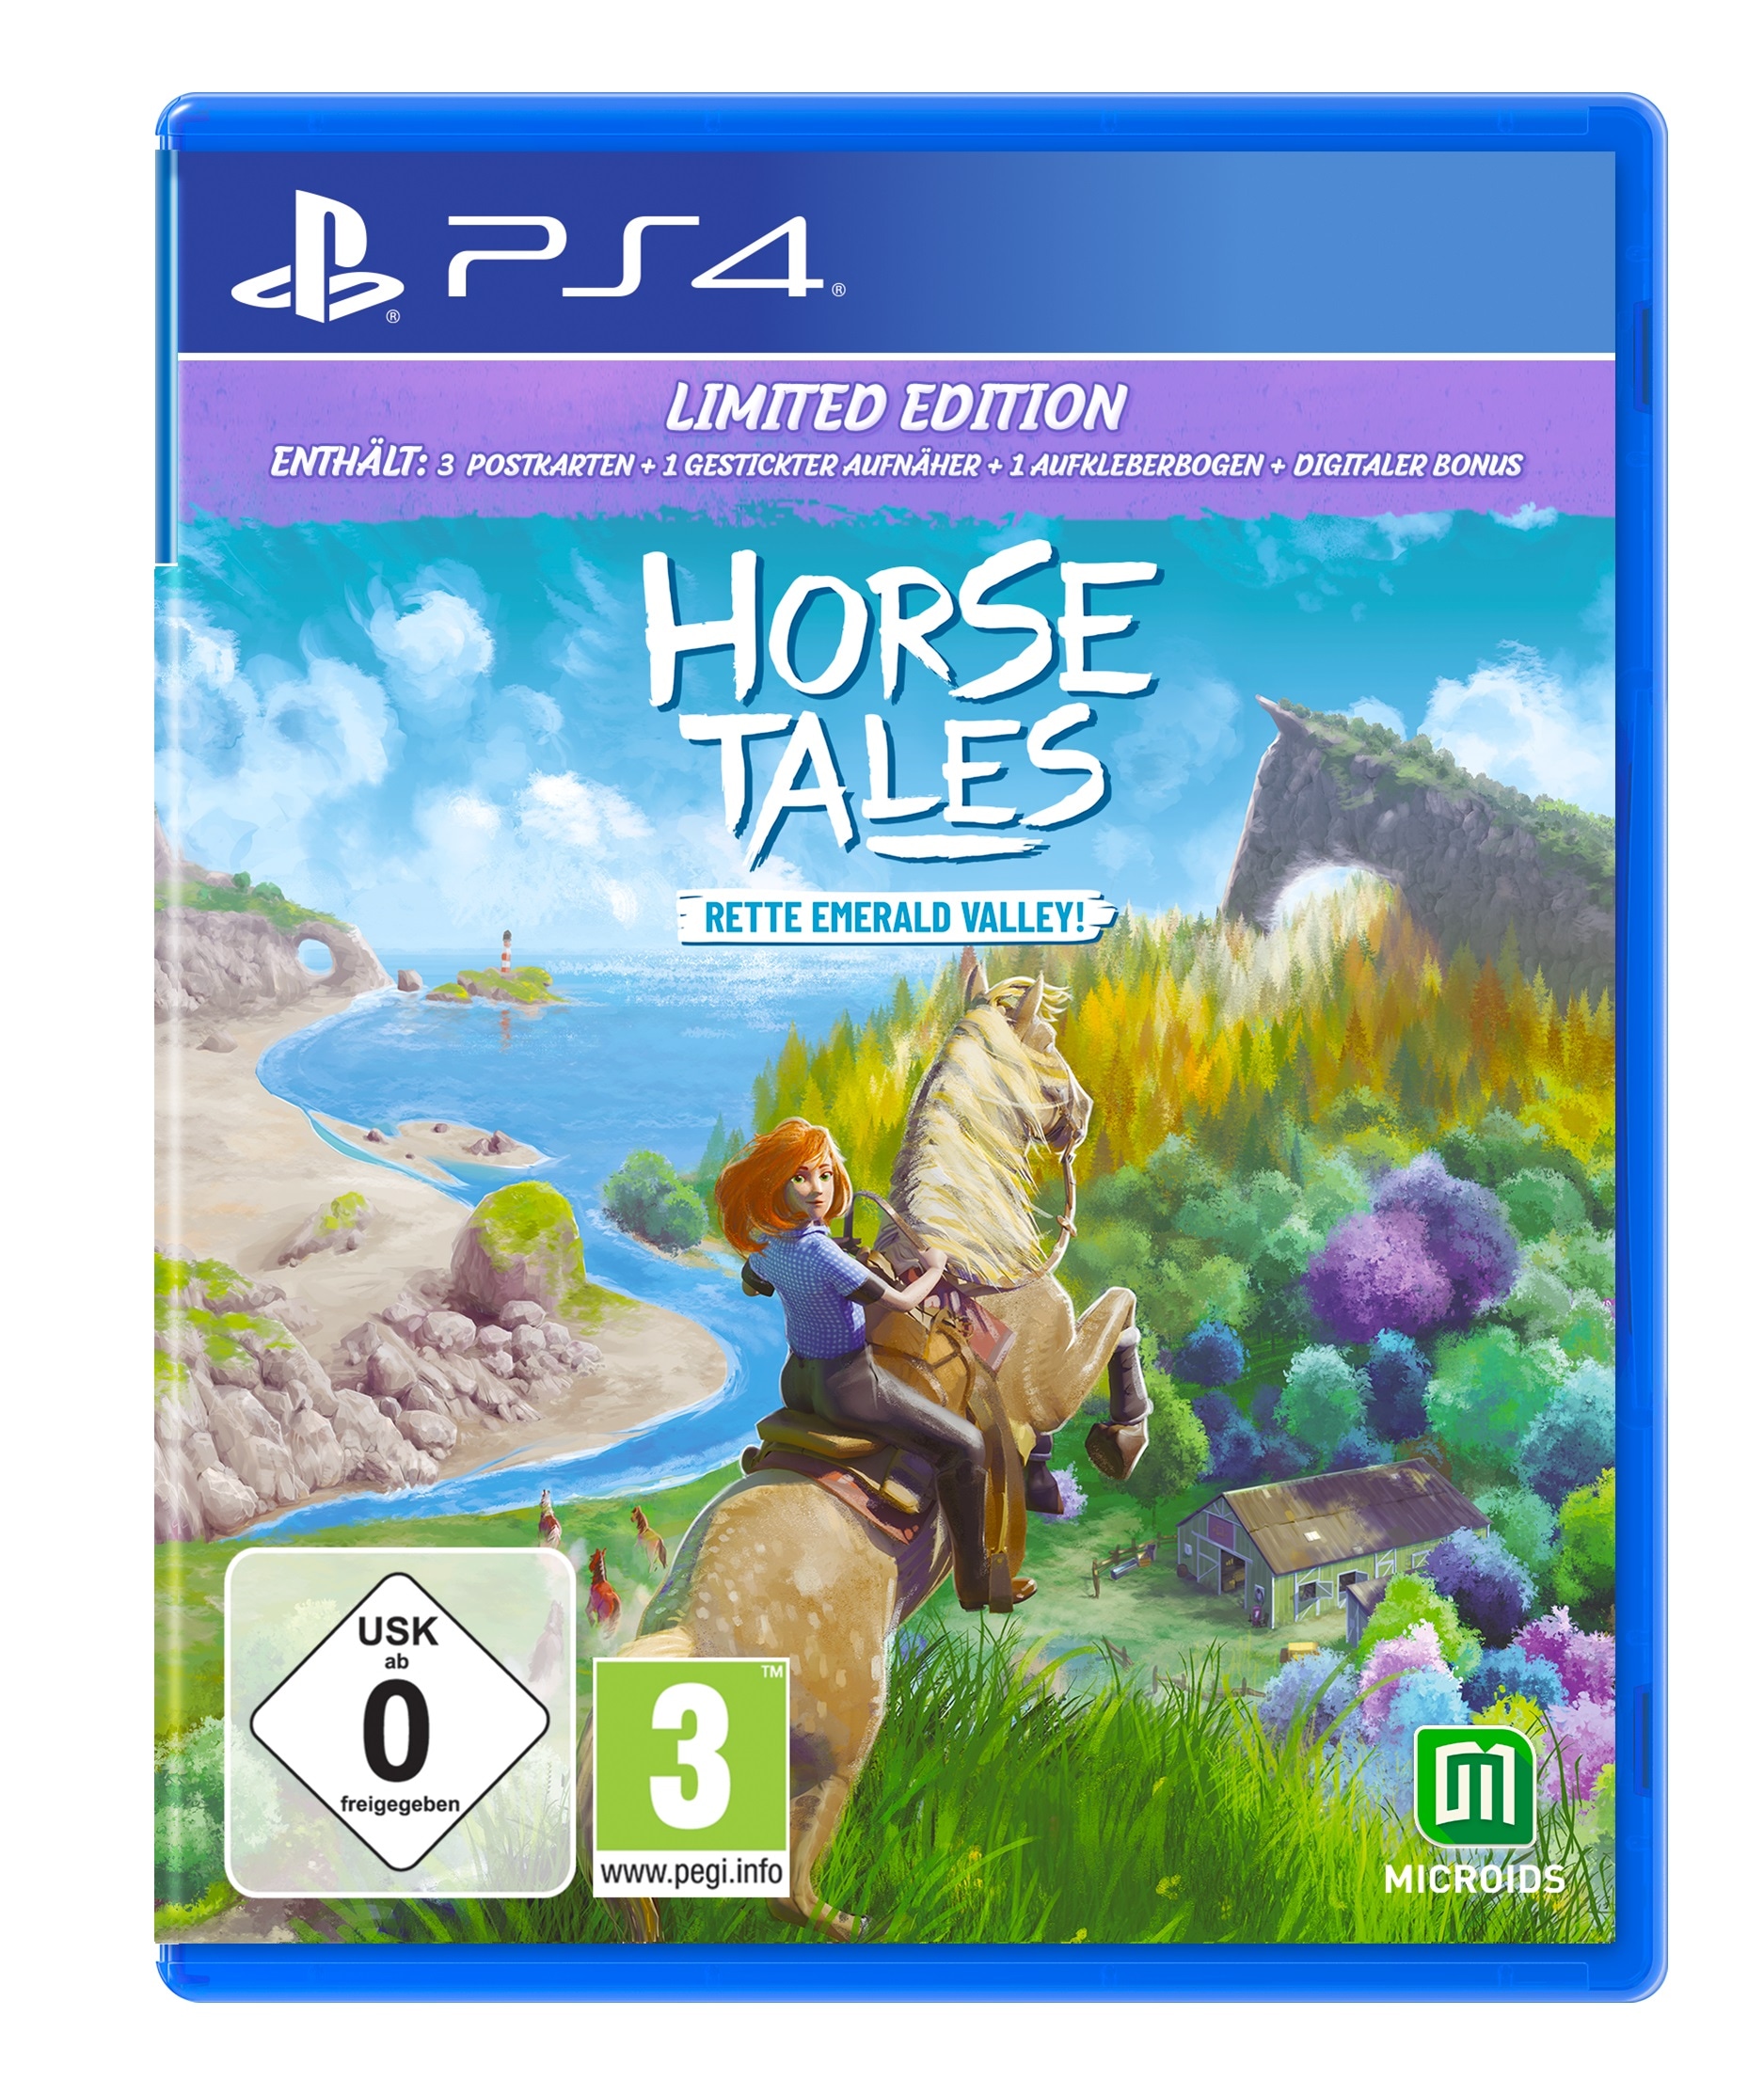 4 Rette Emerald Valley!«, bei PlayStation Astragon Tales: Spielesoftware »Horse